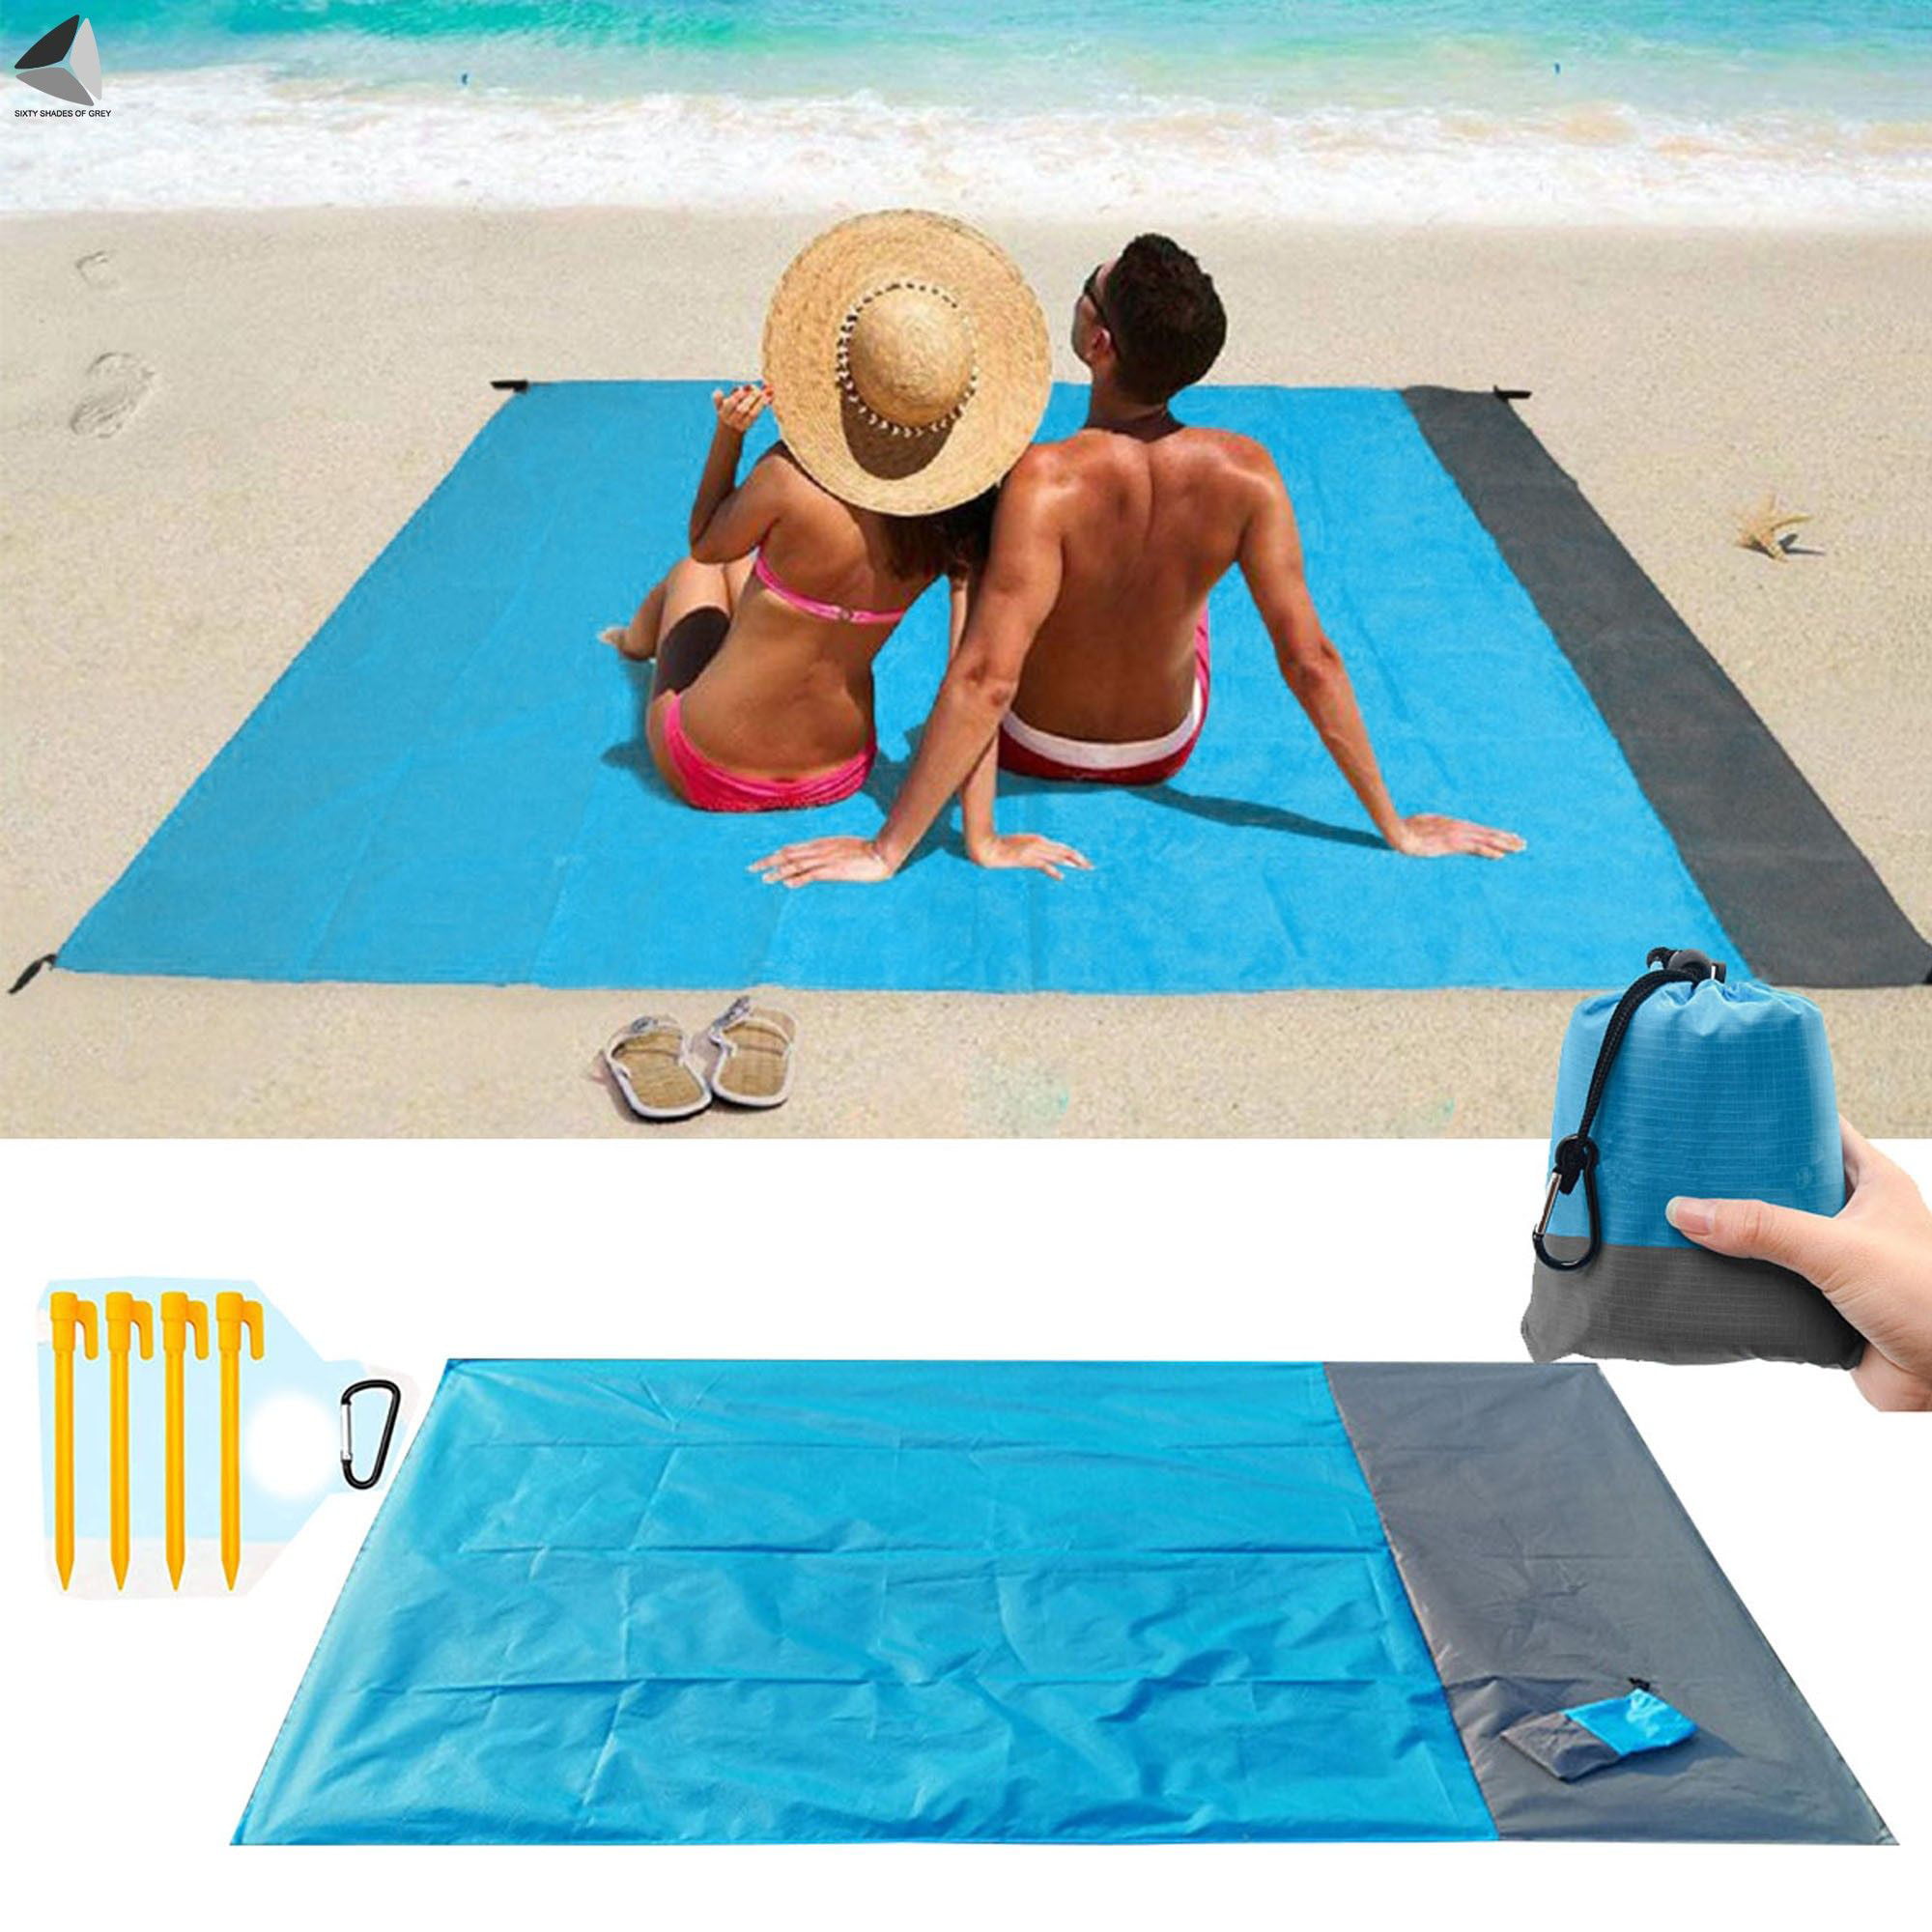 Waterproof Picnic Blanket Camping Beach Mat Pad Outdoor Travel Folding Rug 79x59 